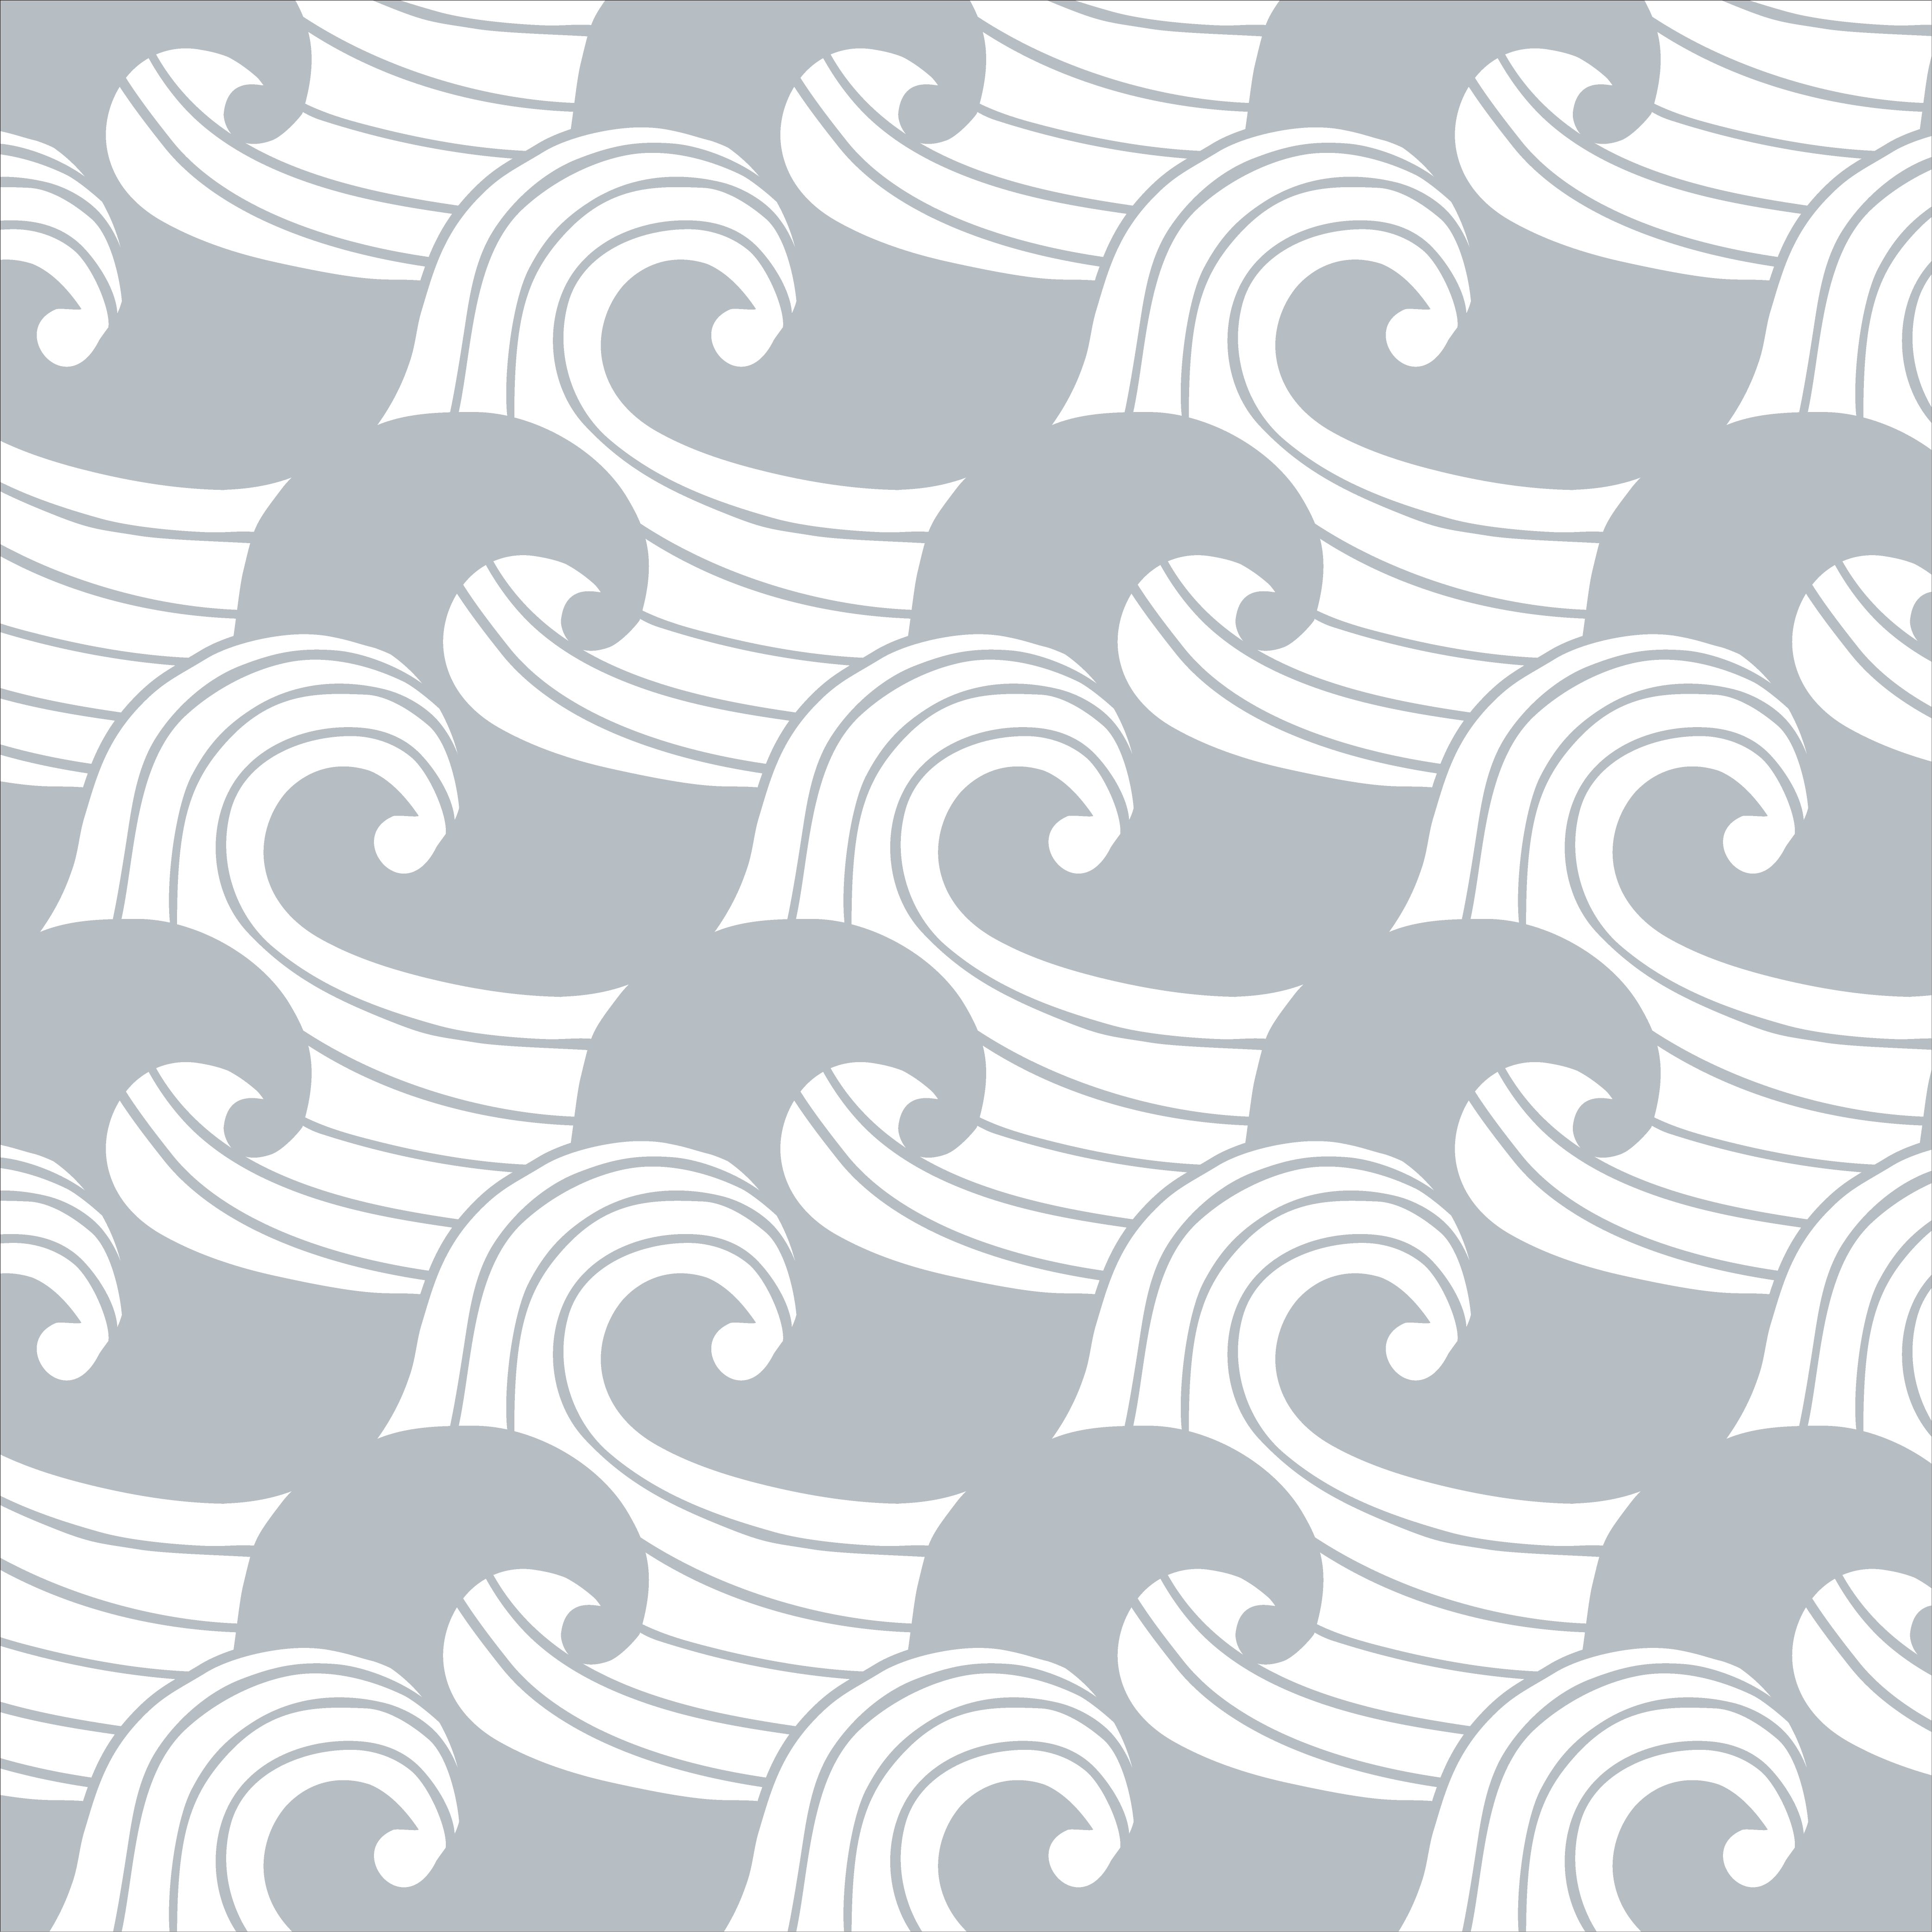 WAVES | Tranquil gray | Pillowcase | 40x80cm / 15.7x31.5&quot;